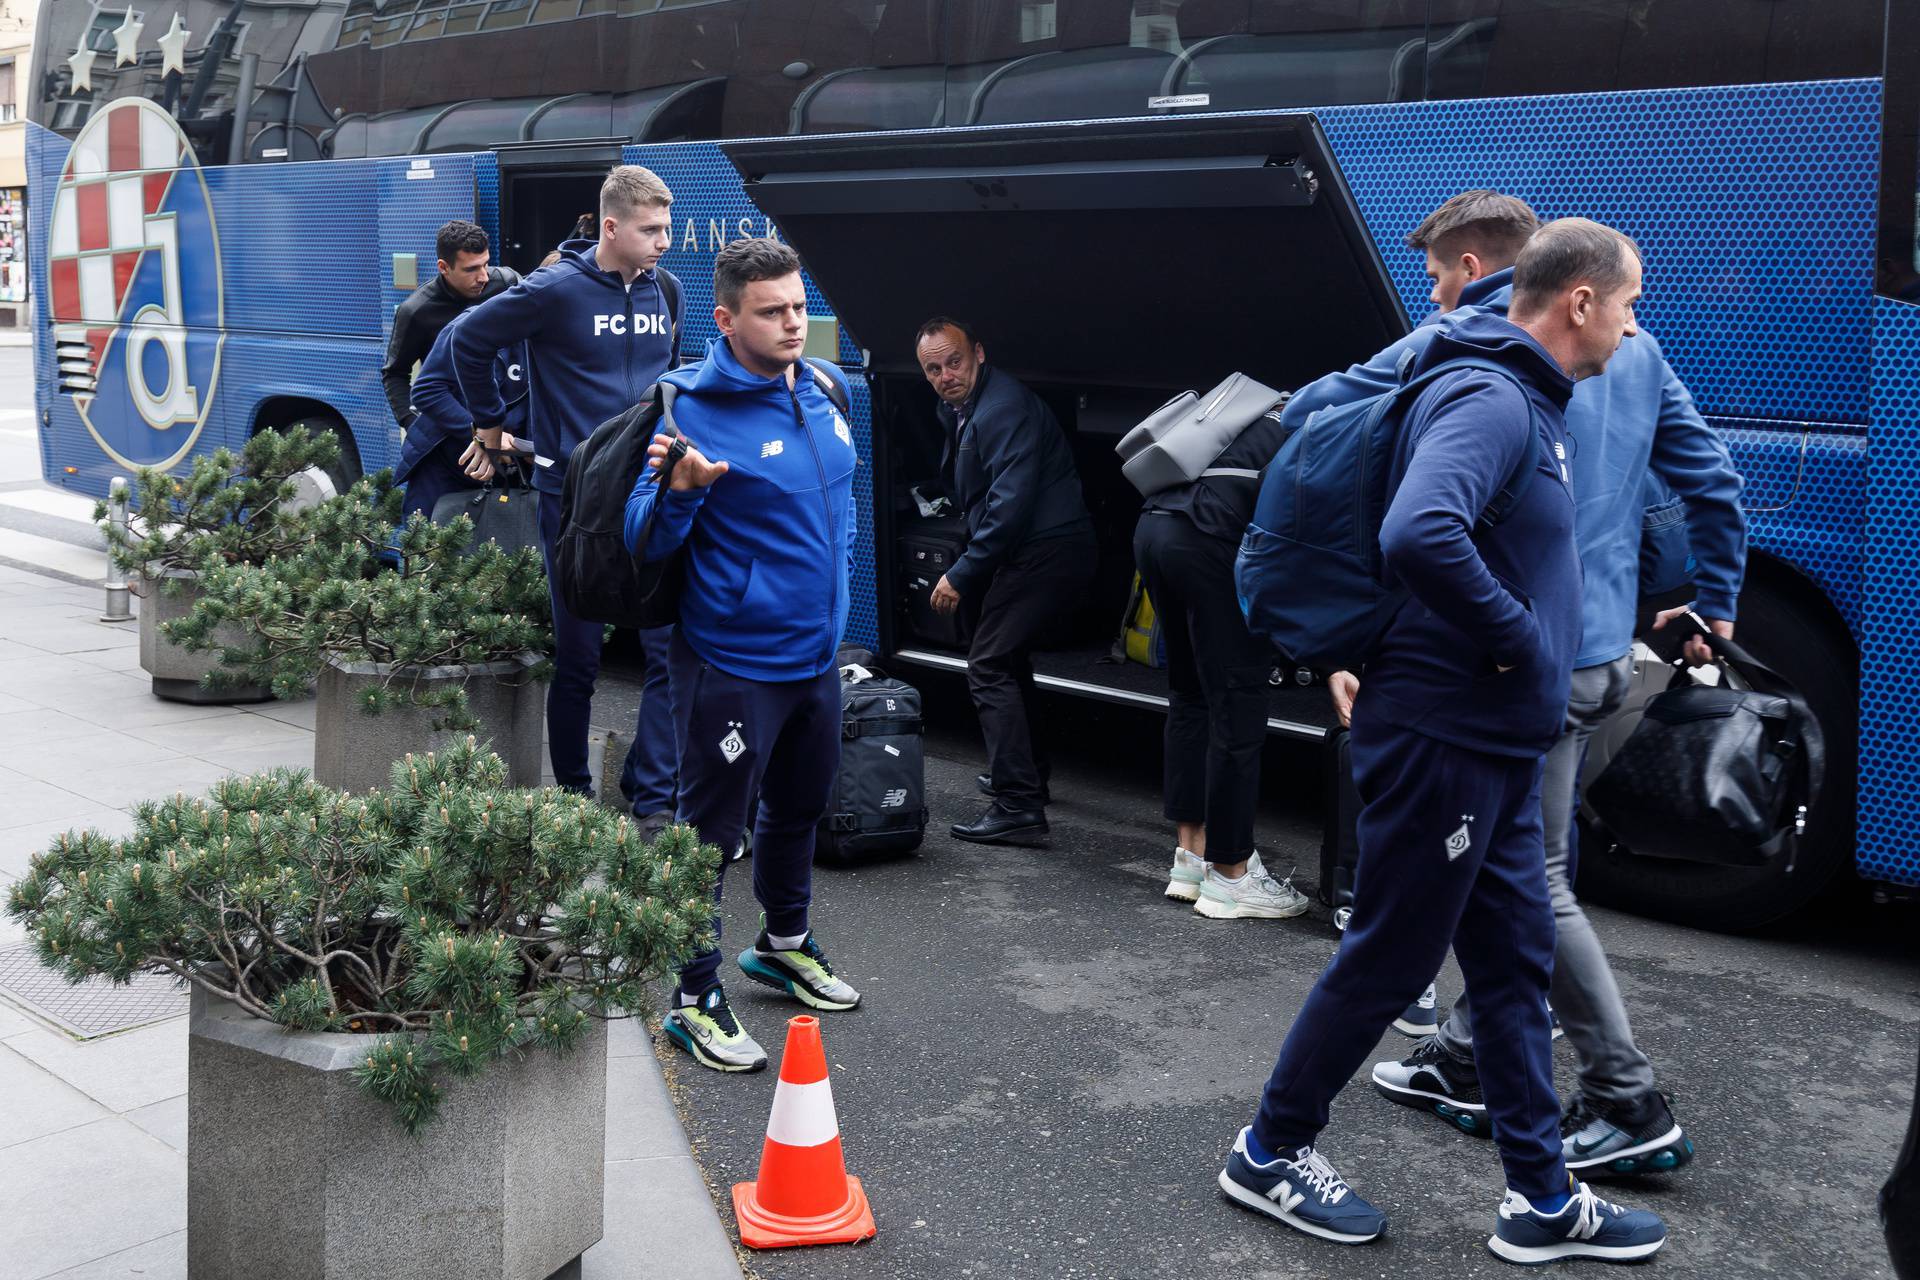 Igrači FC Dynamo Kyiv stigli u Hotel Sheraton u autobusu GNK Dinamo Zagreb